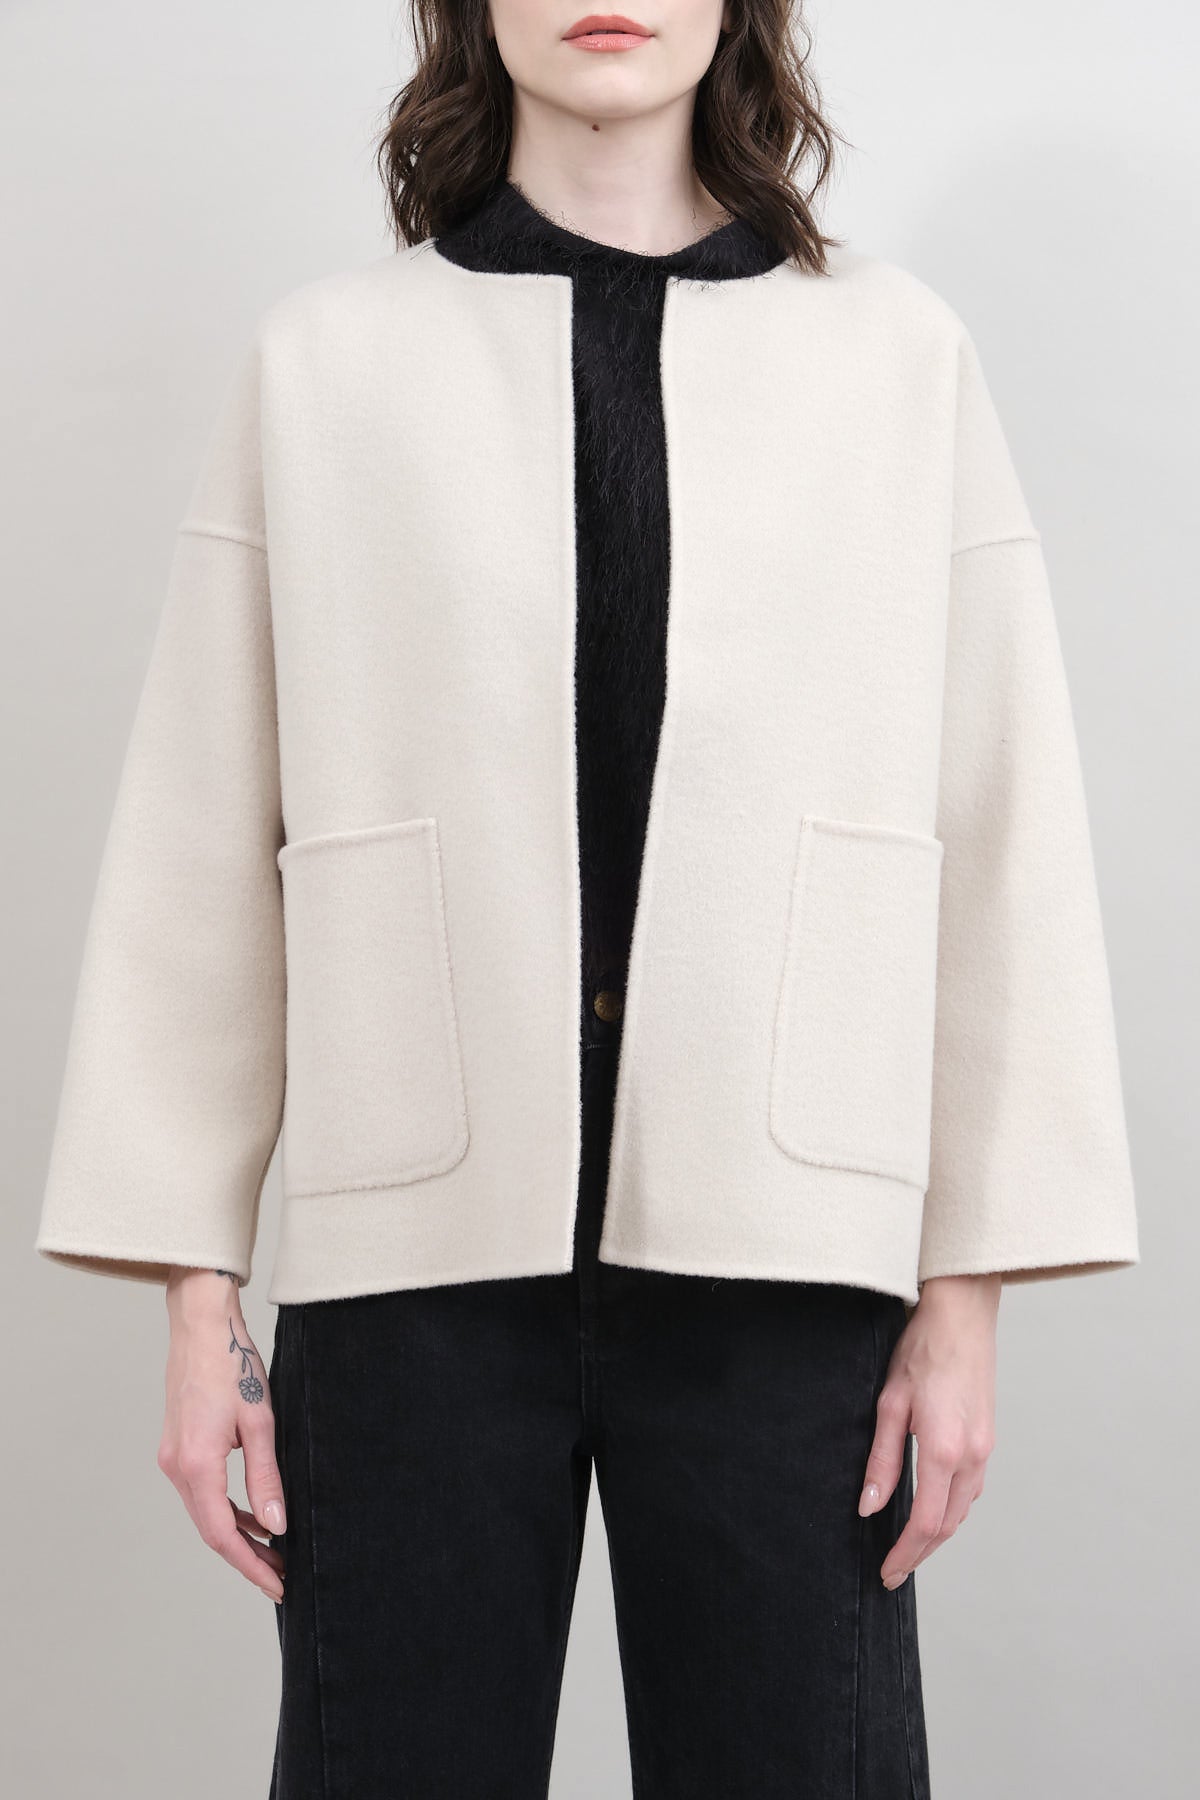 Evam Eva Press Wool Short Coat - ShopperBoard